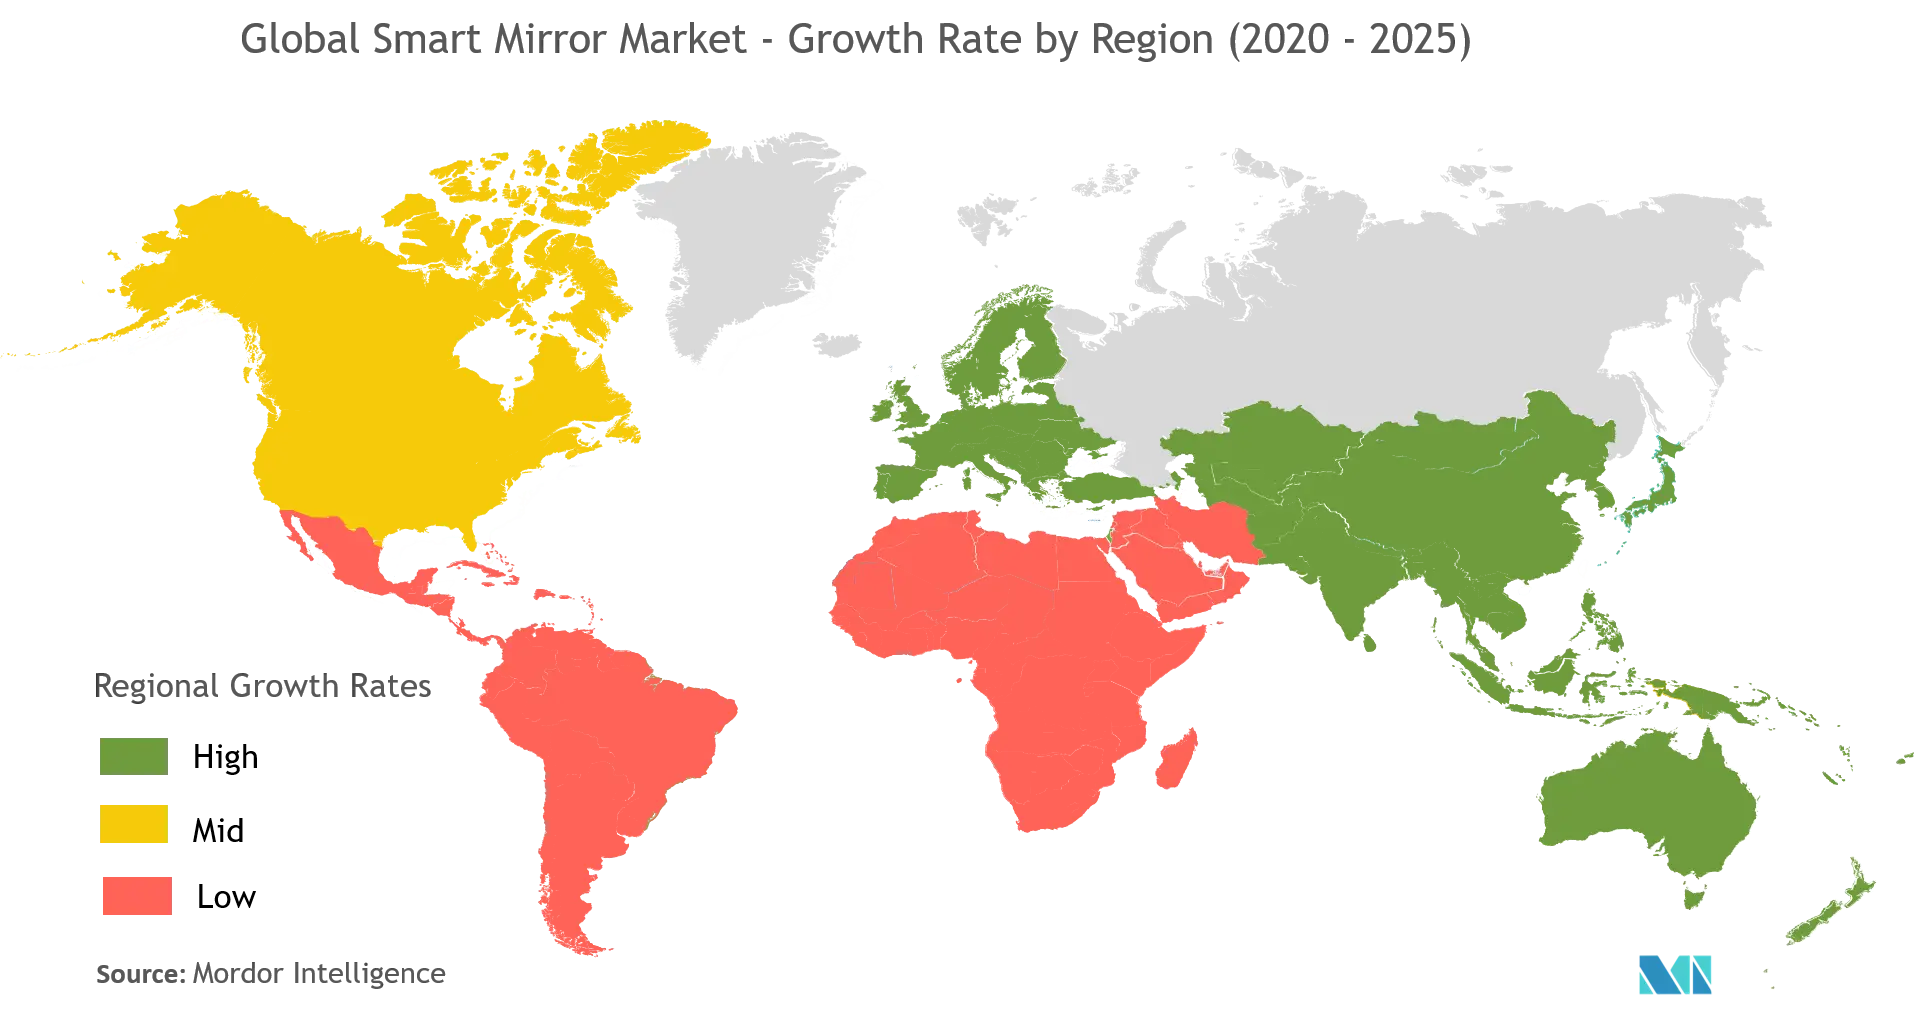 Smart Mirror Market - Growth Rate by Region (2020-2025)